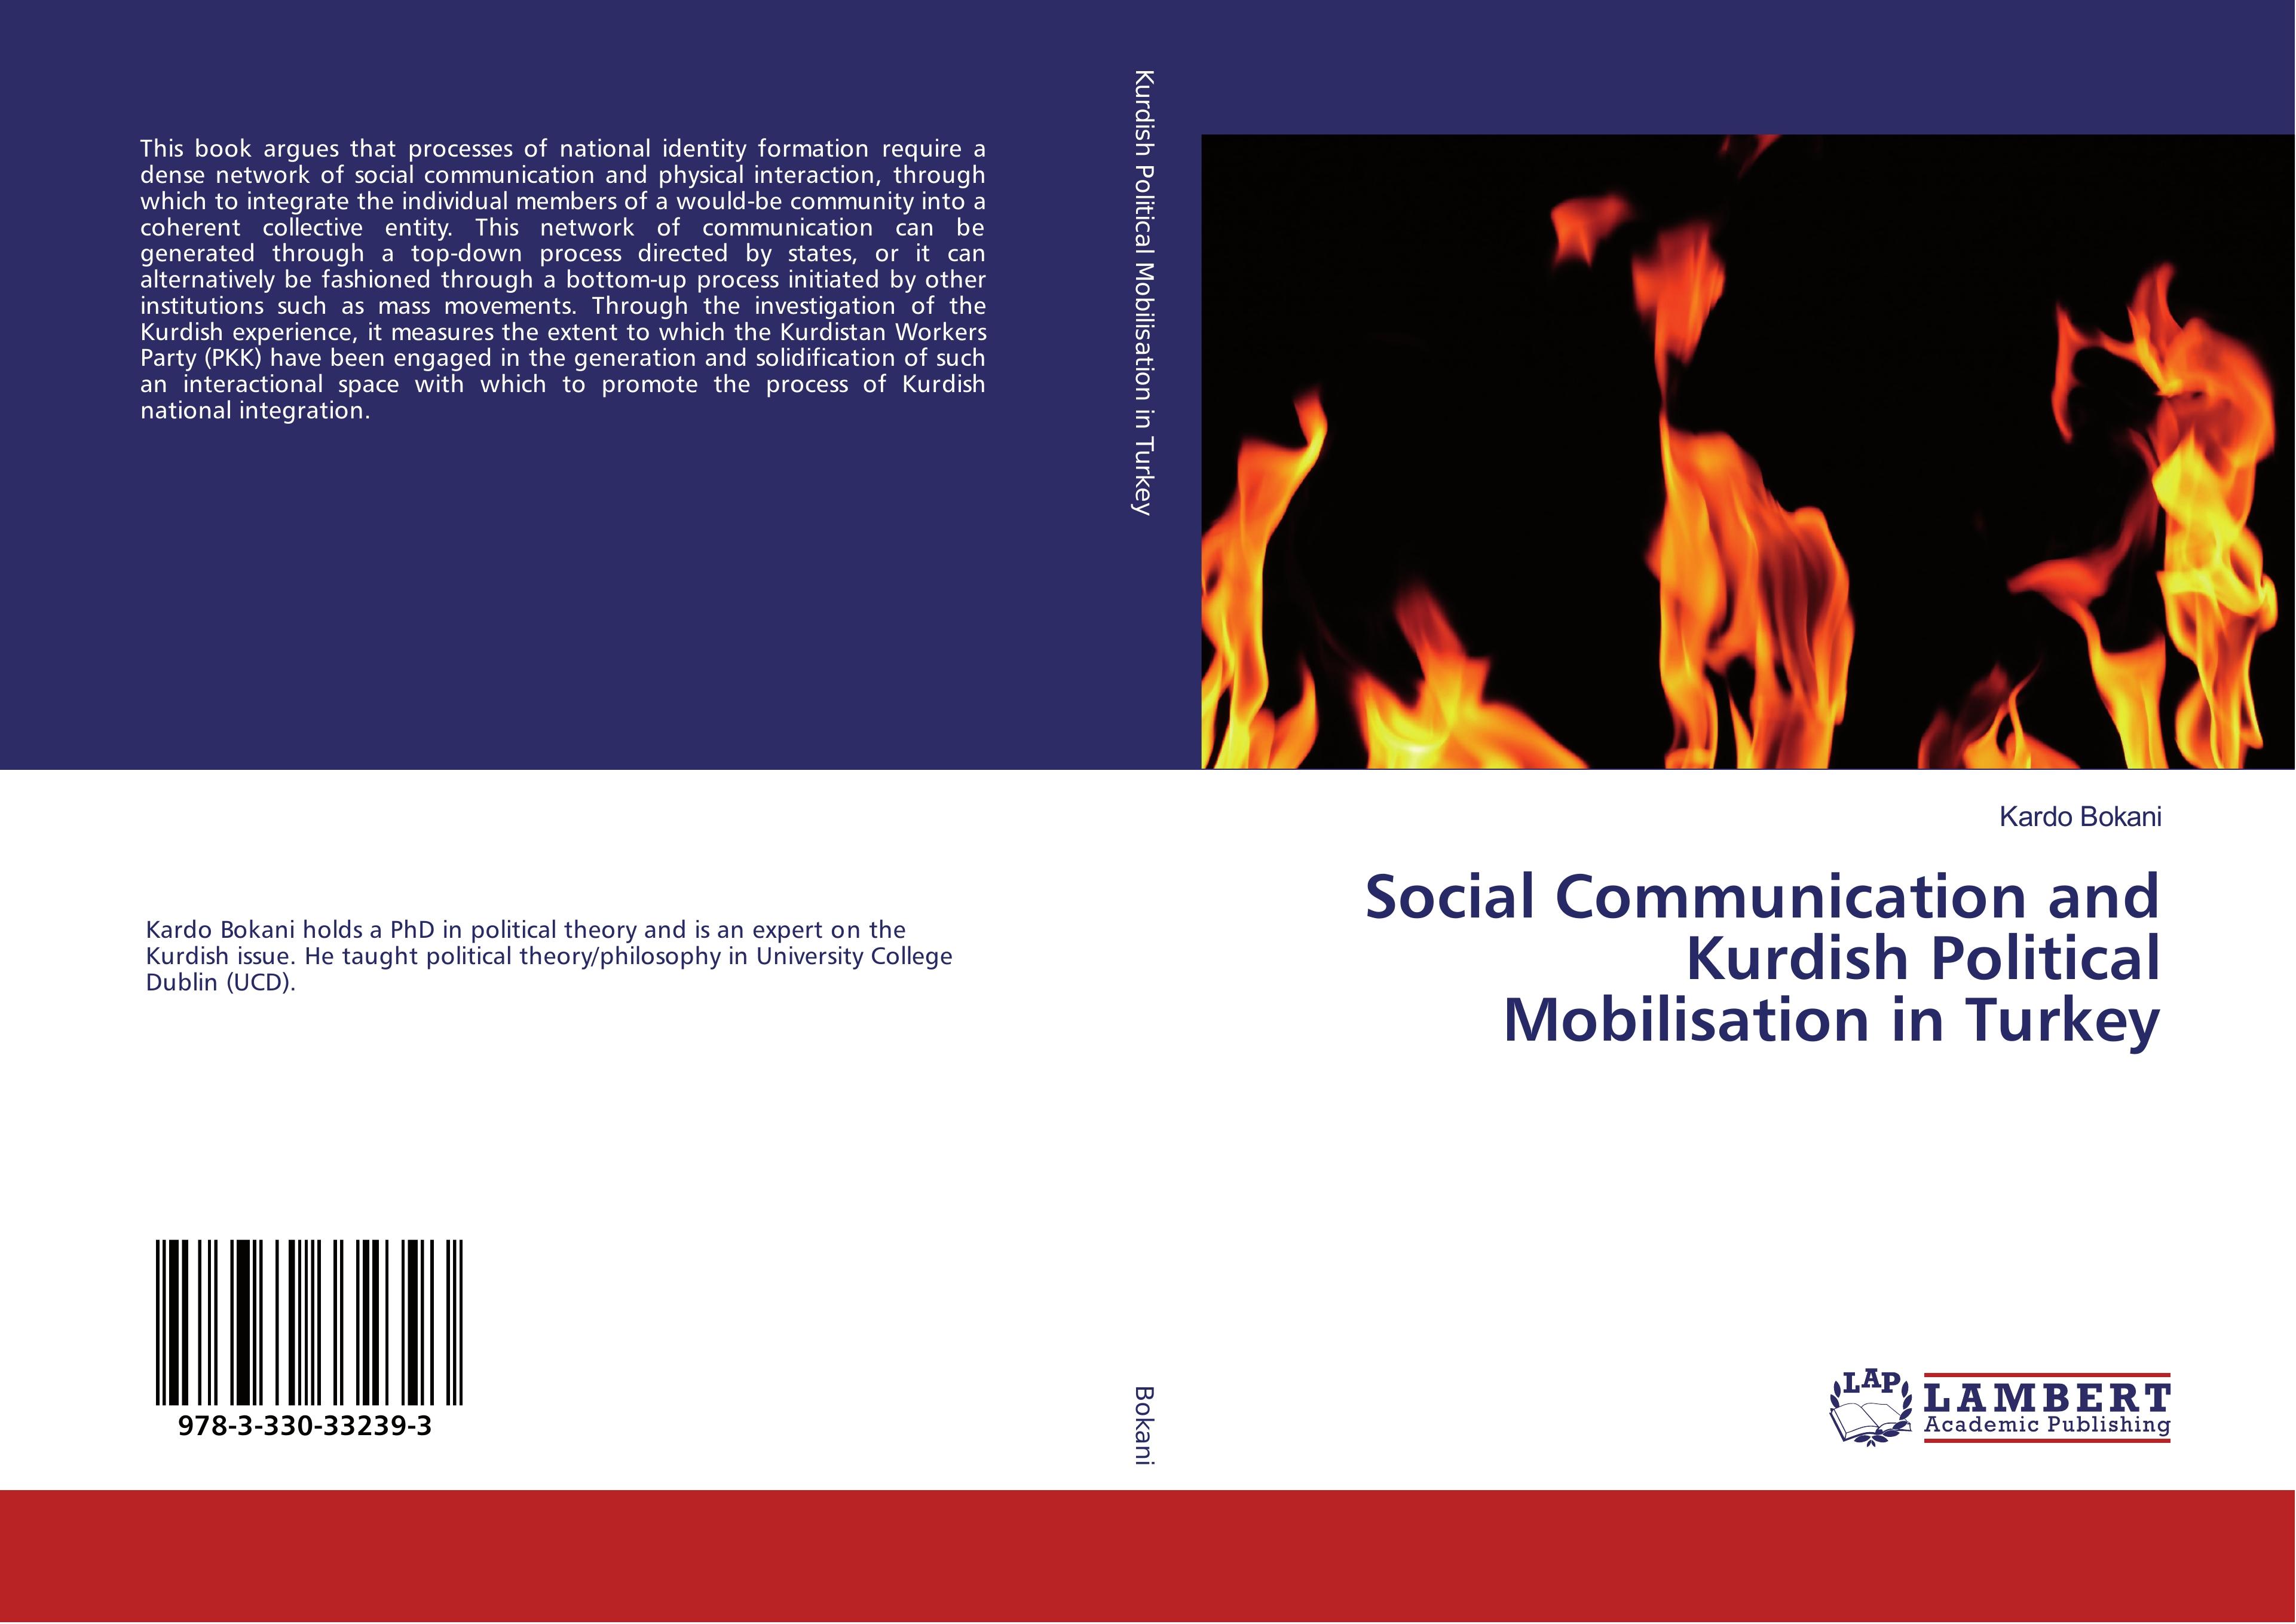 Social Communication and Kurdish Political Mobilisation in Turkey - Kardo Bokani